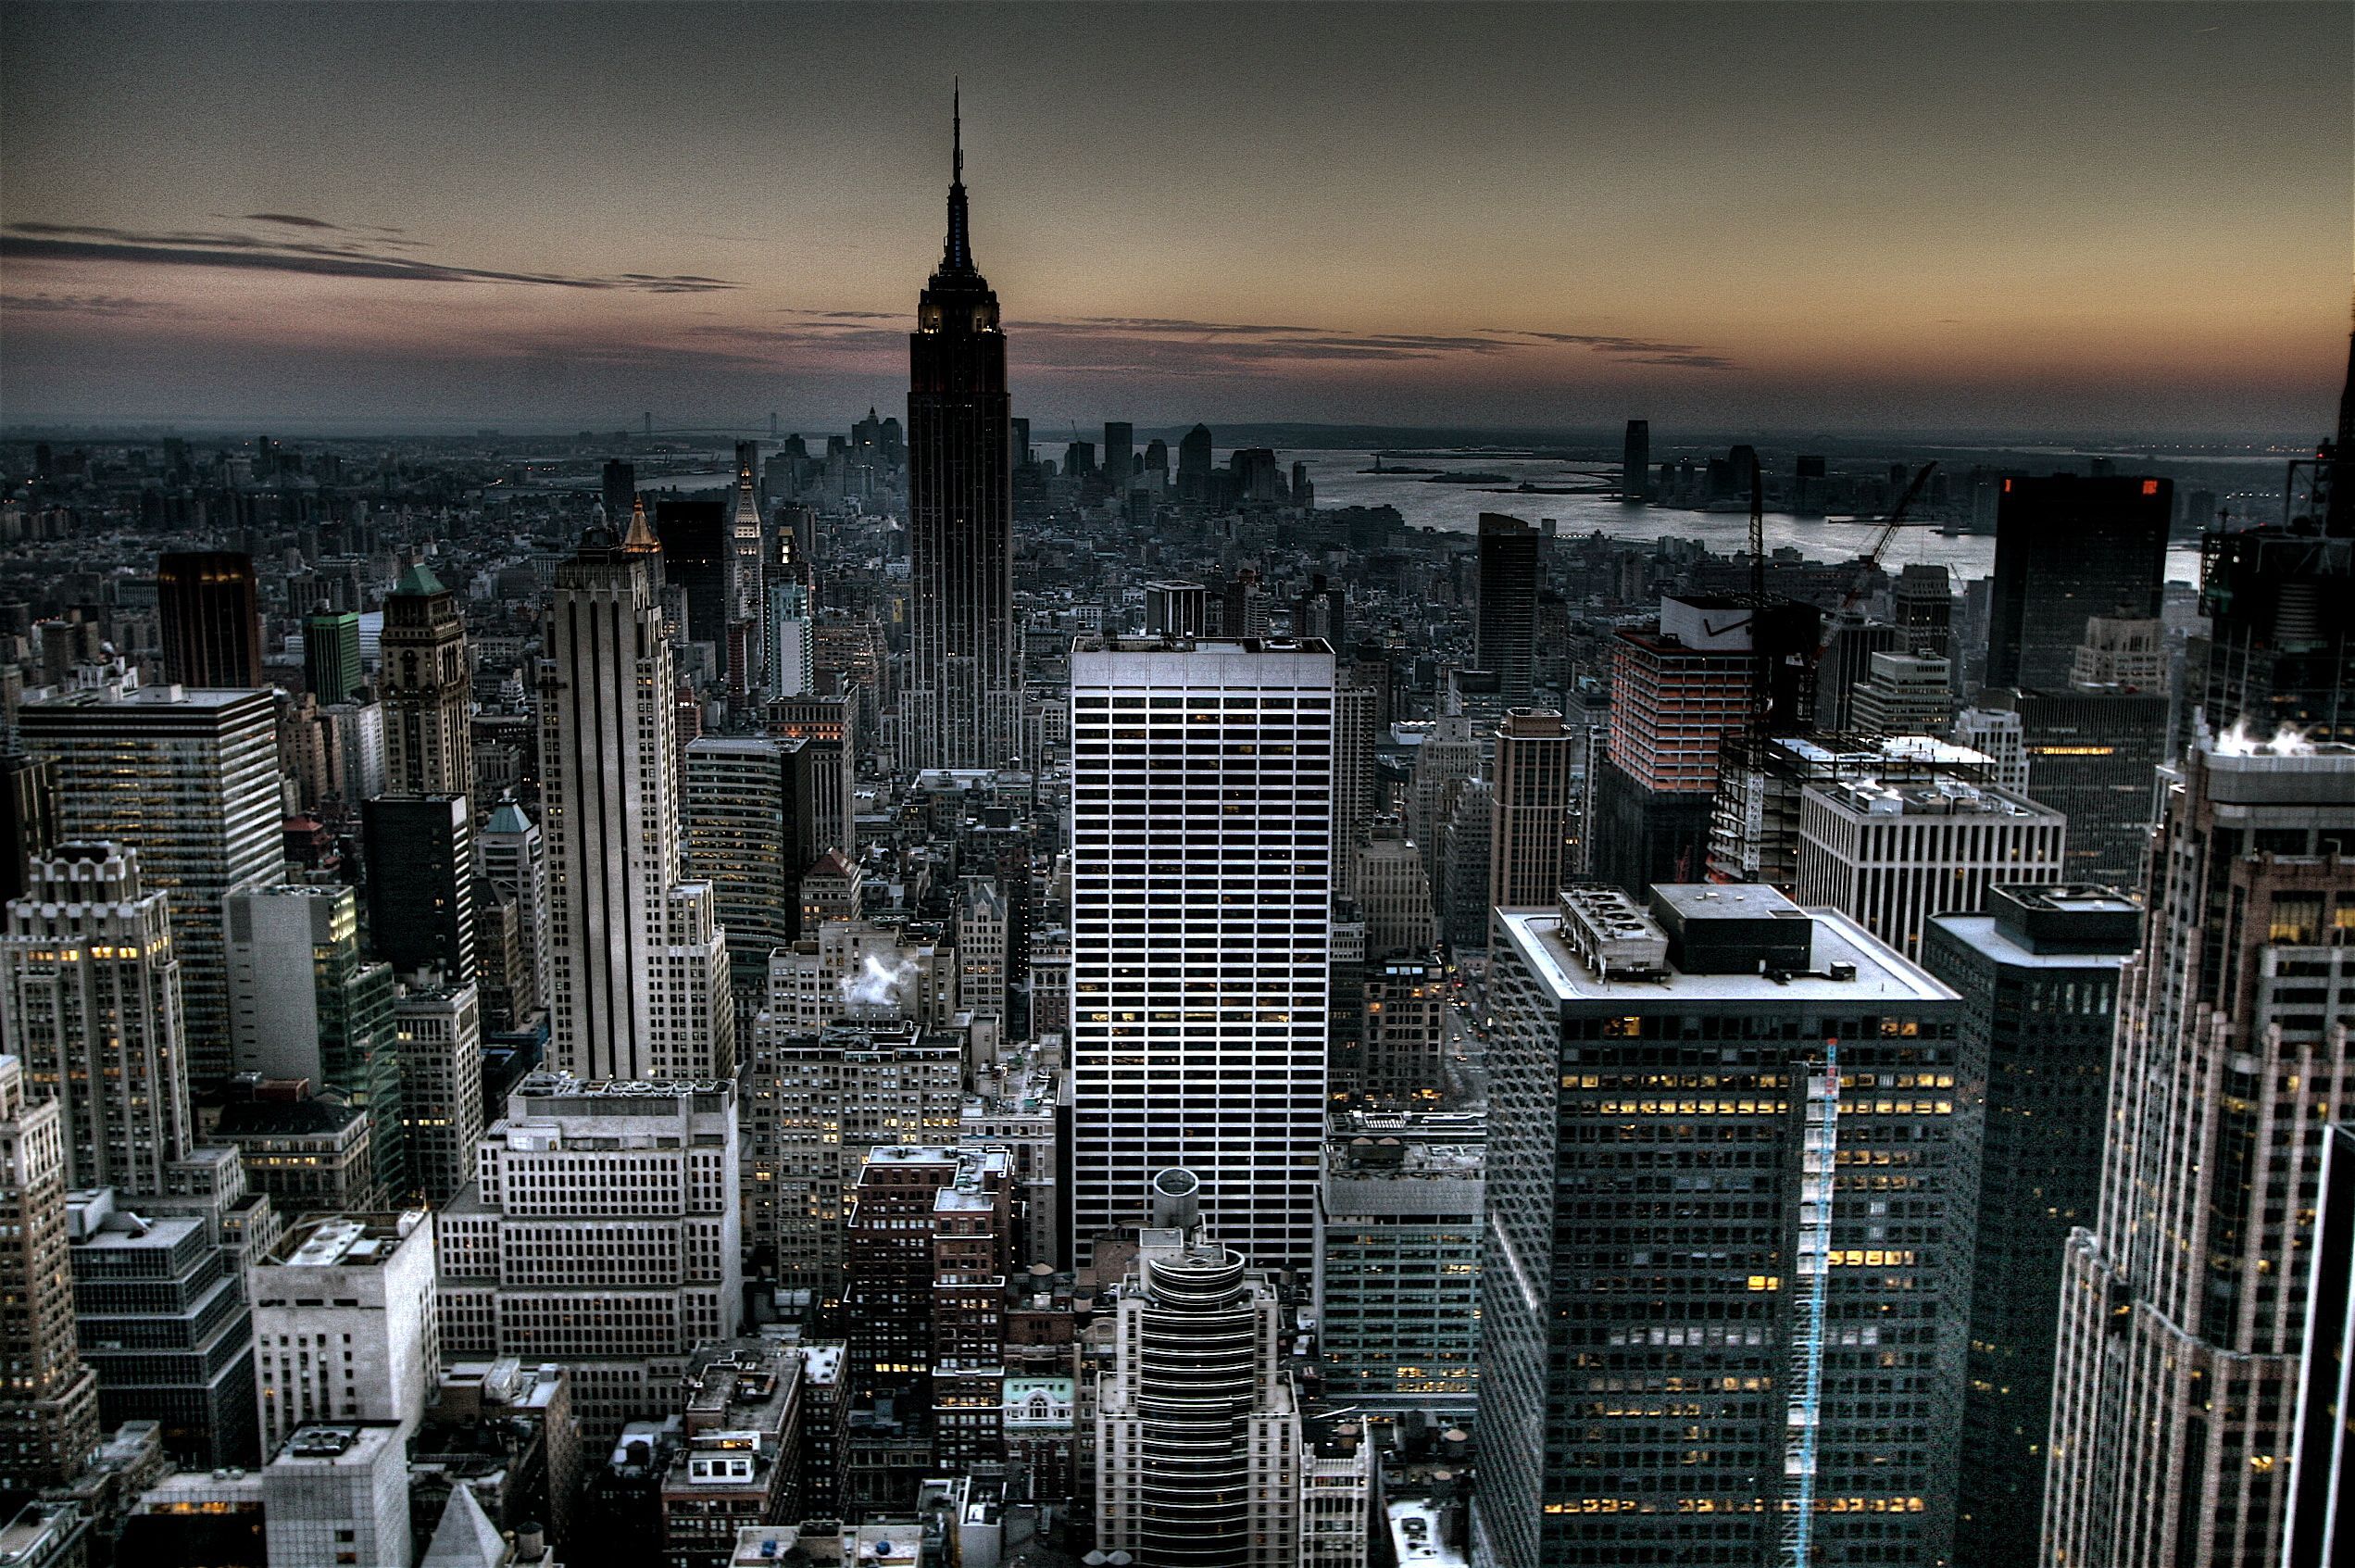 Gotham City Background New York City Skyline Wallpaper (HDR ...